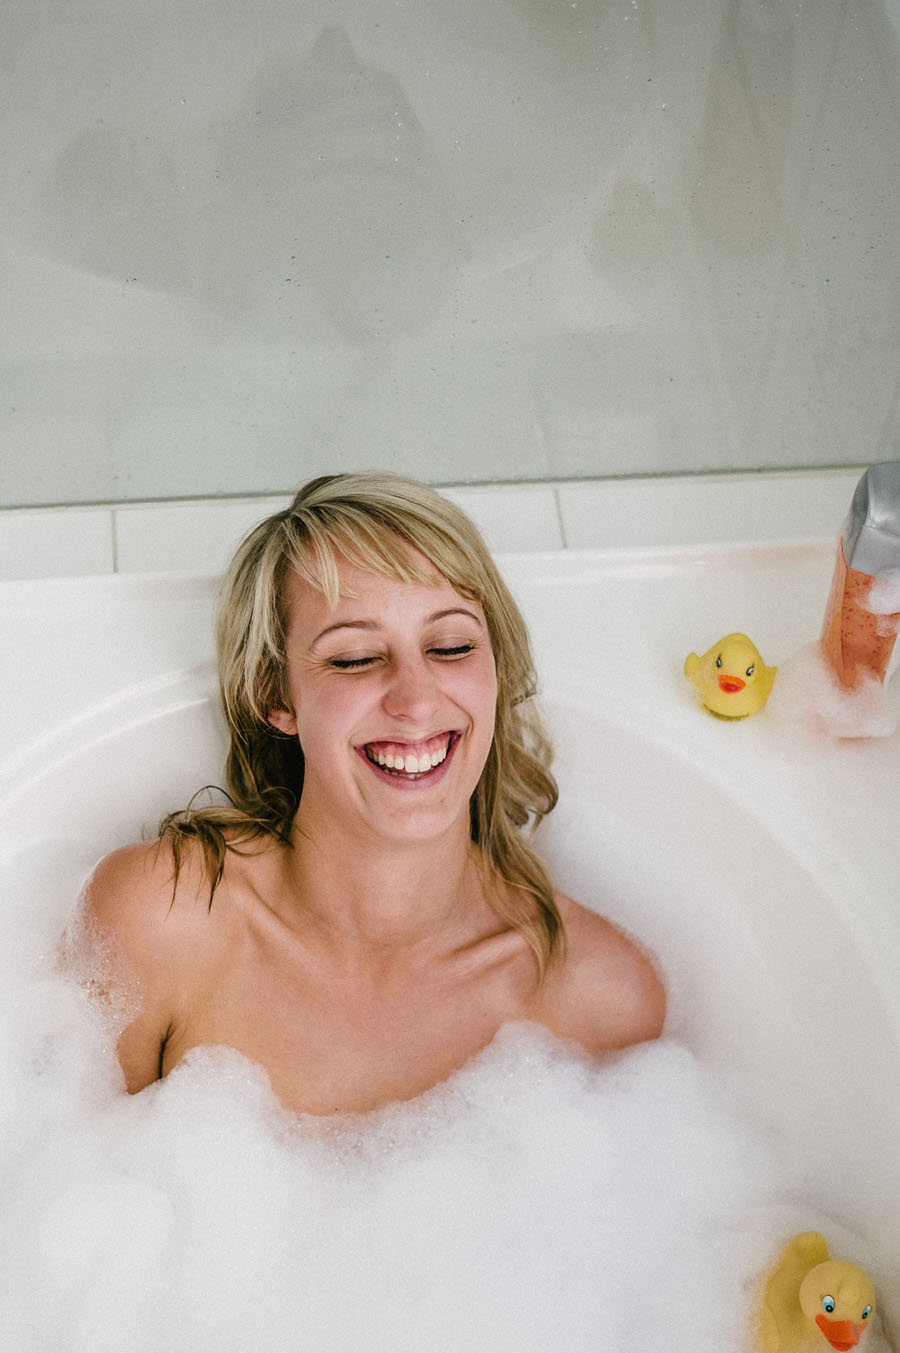 Blonde bathtub portrait